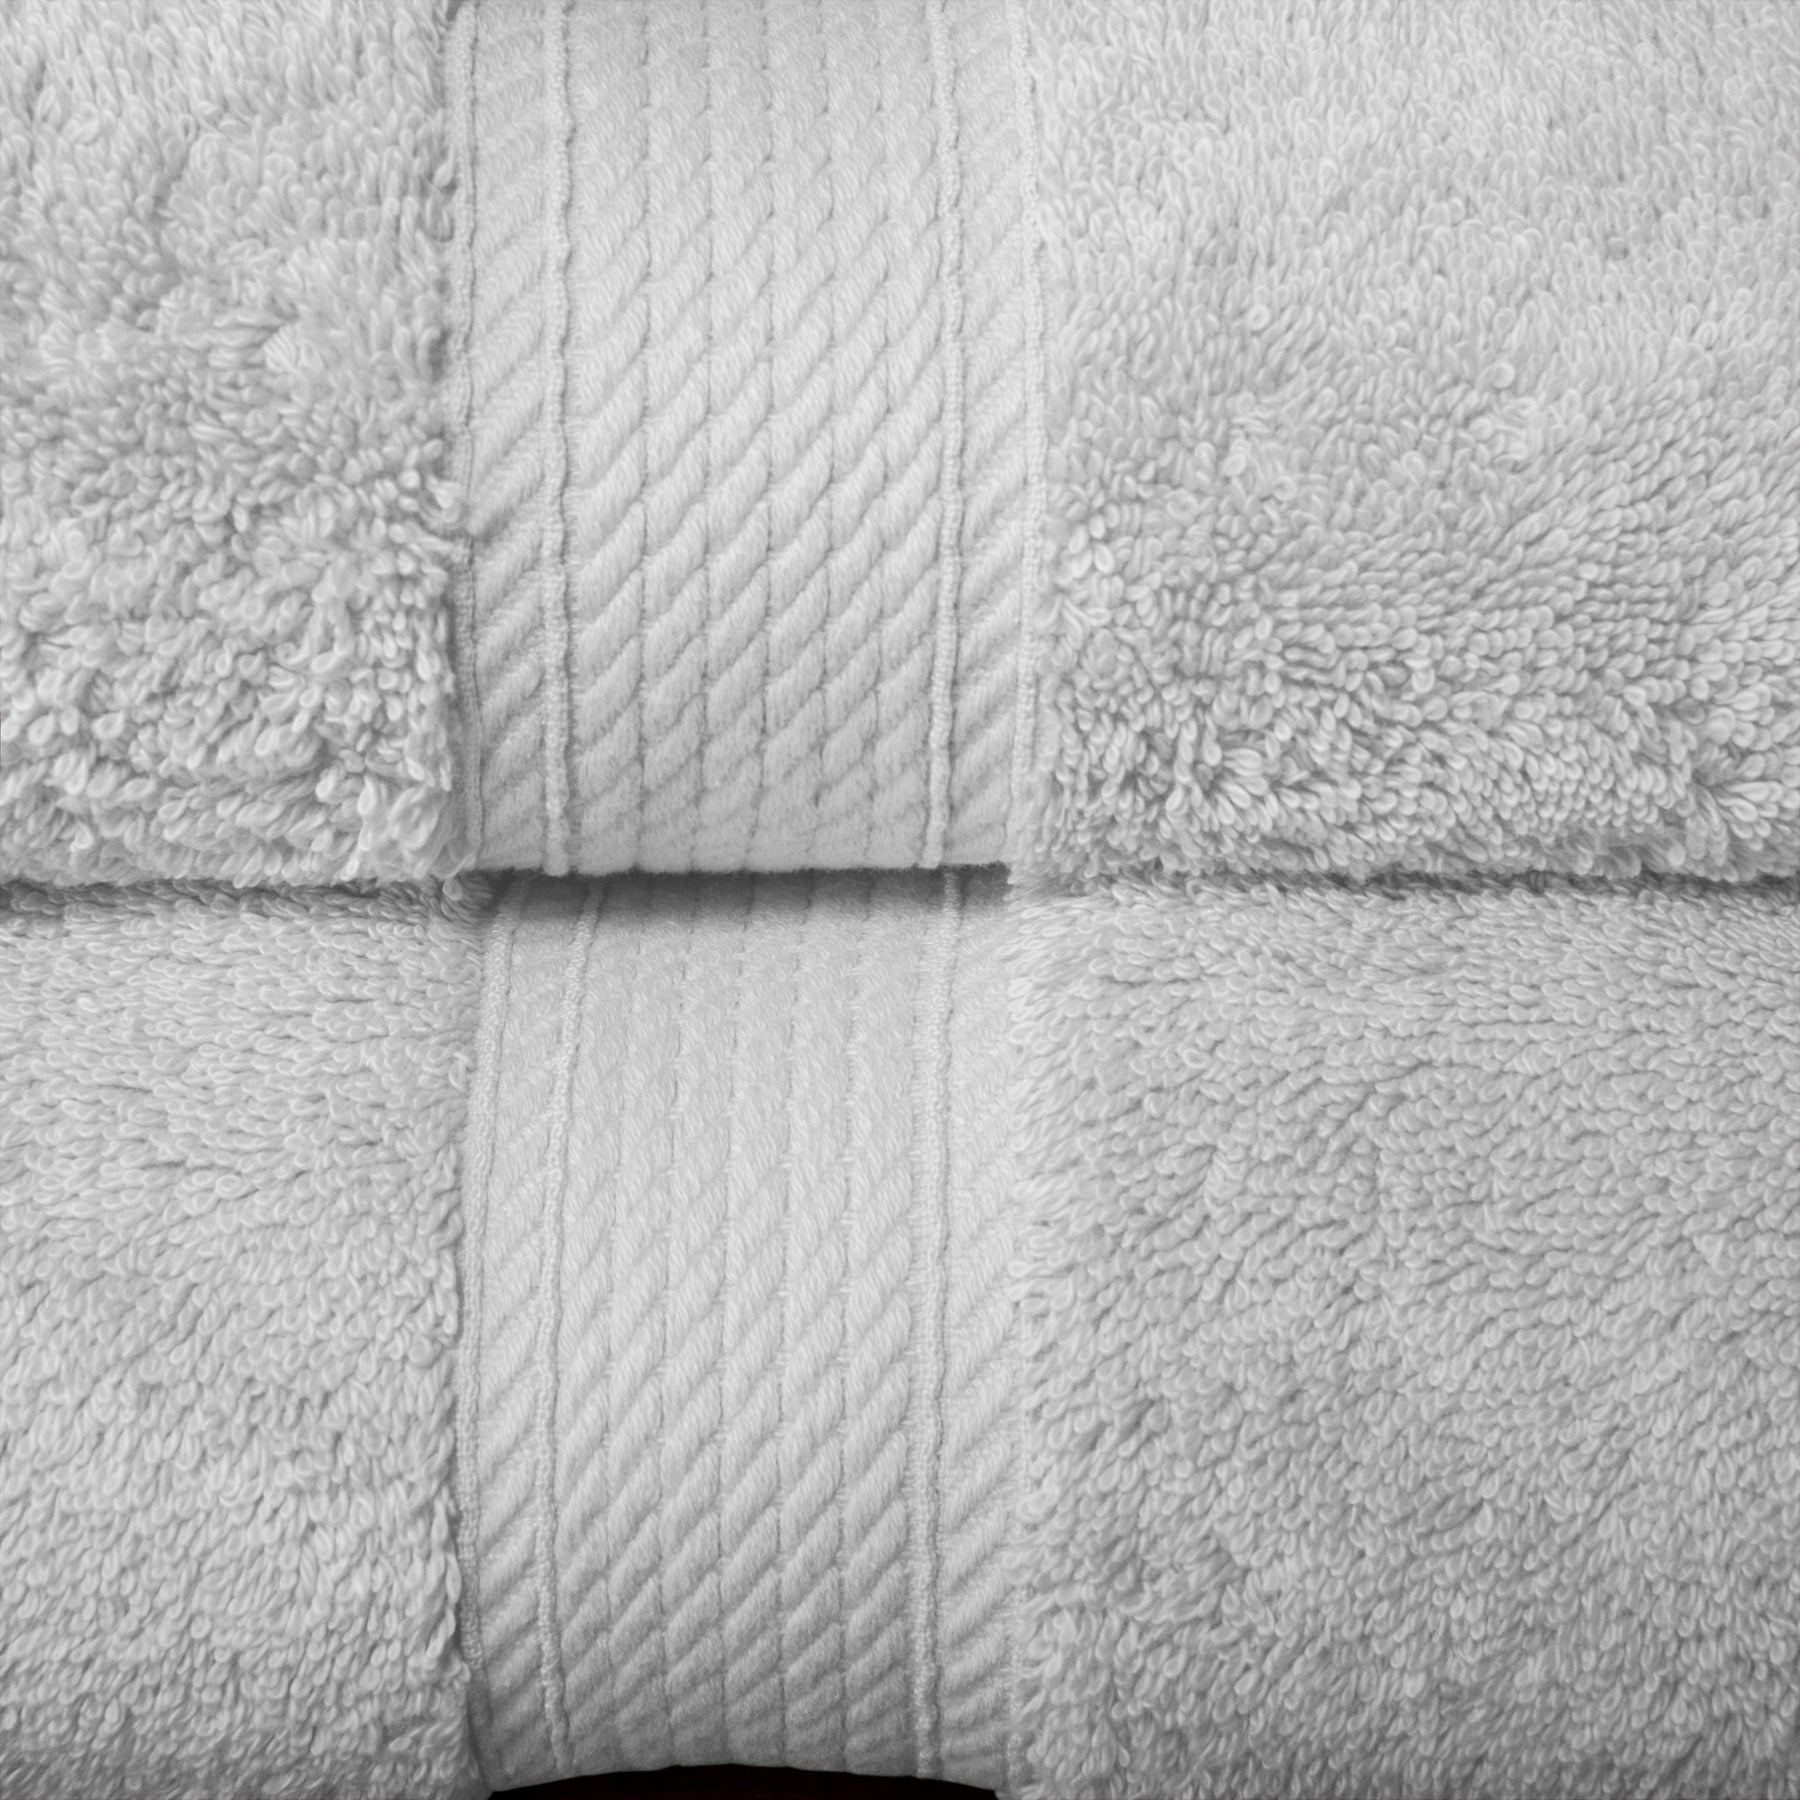 Hotel Style 6-Piece Egyptian Cotton Bath Towel Set, Birchwood, Size: 6 Piece Bath Towel Set